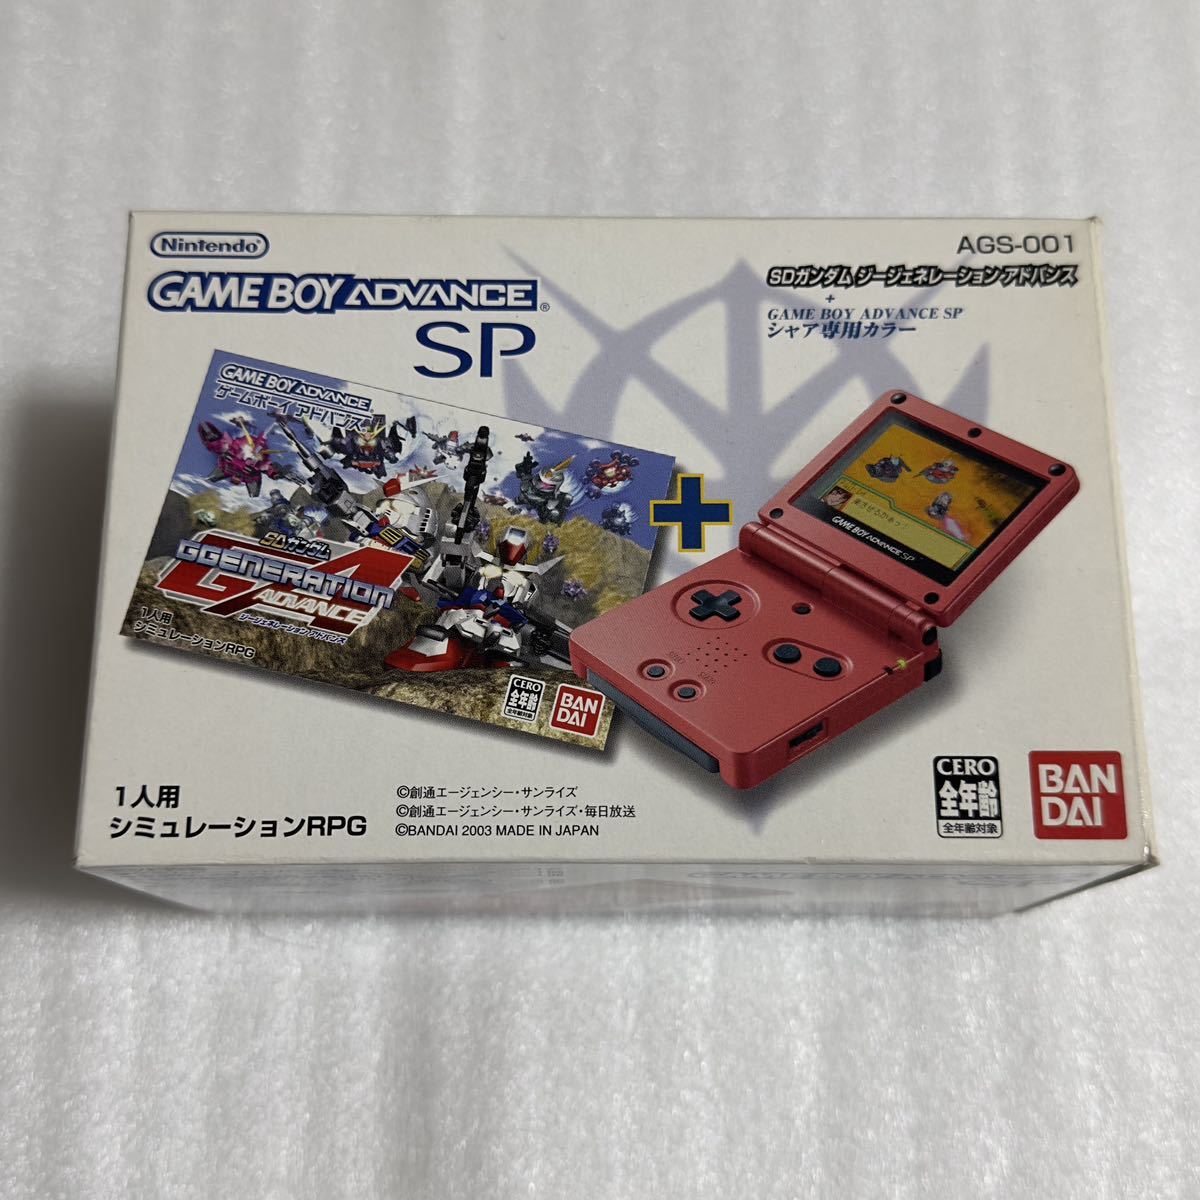 SD Gundam ji- generation advance + Game Boy Advance SP car a exclusive use color 